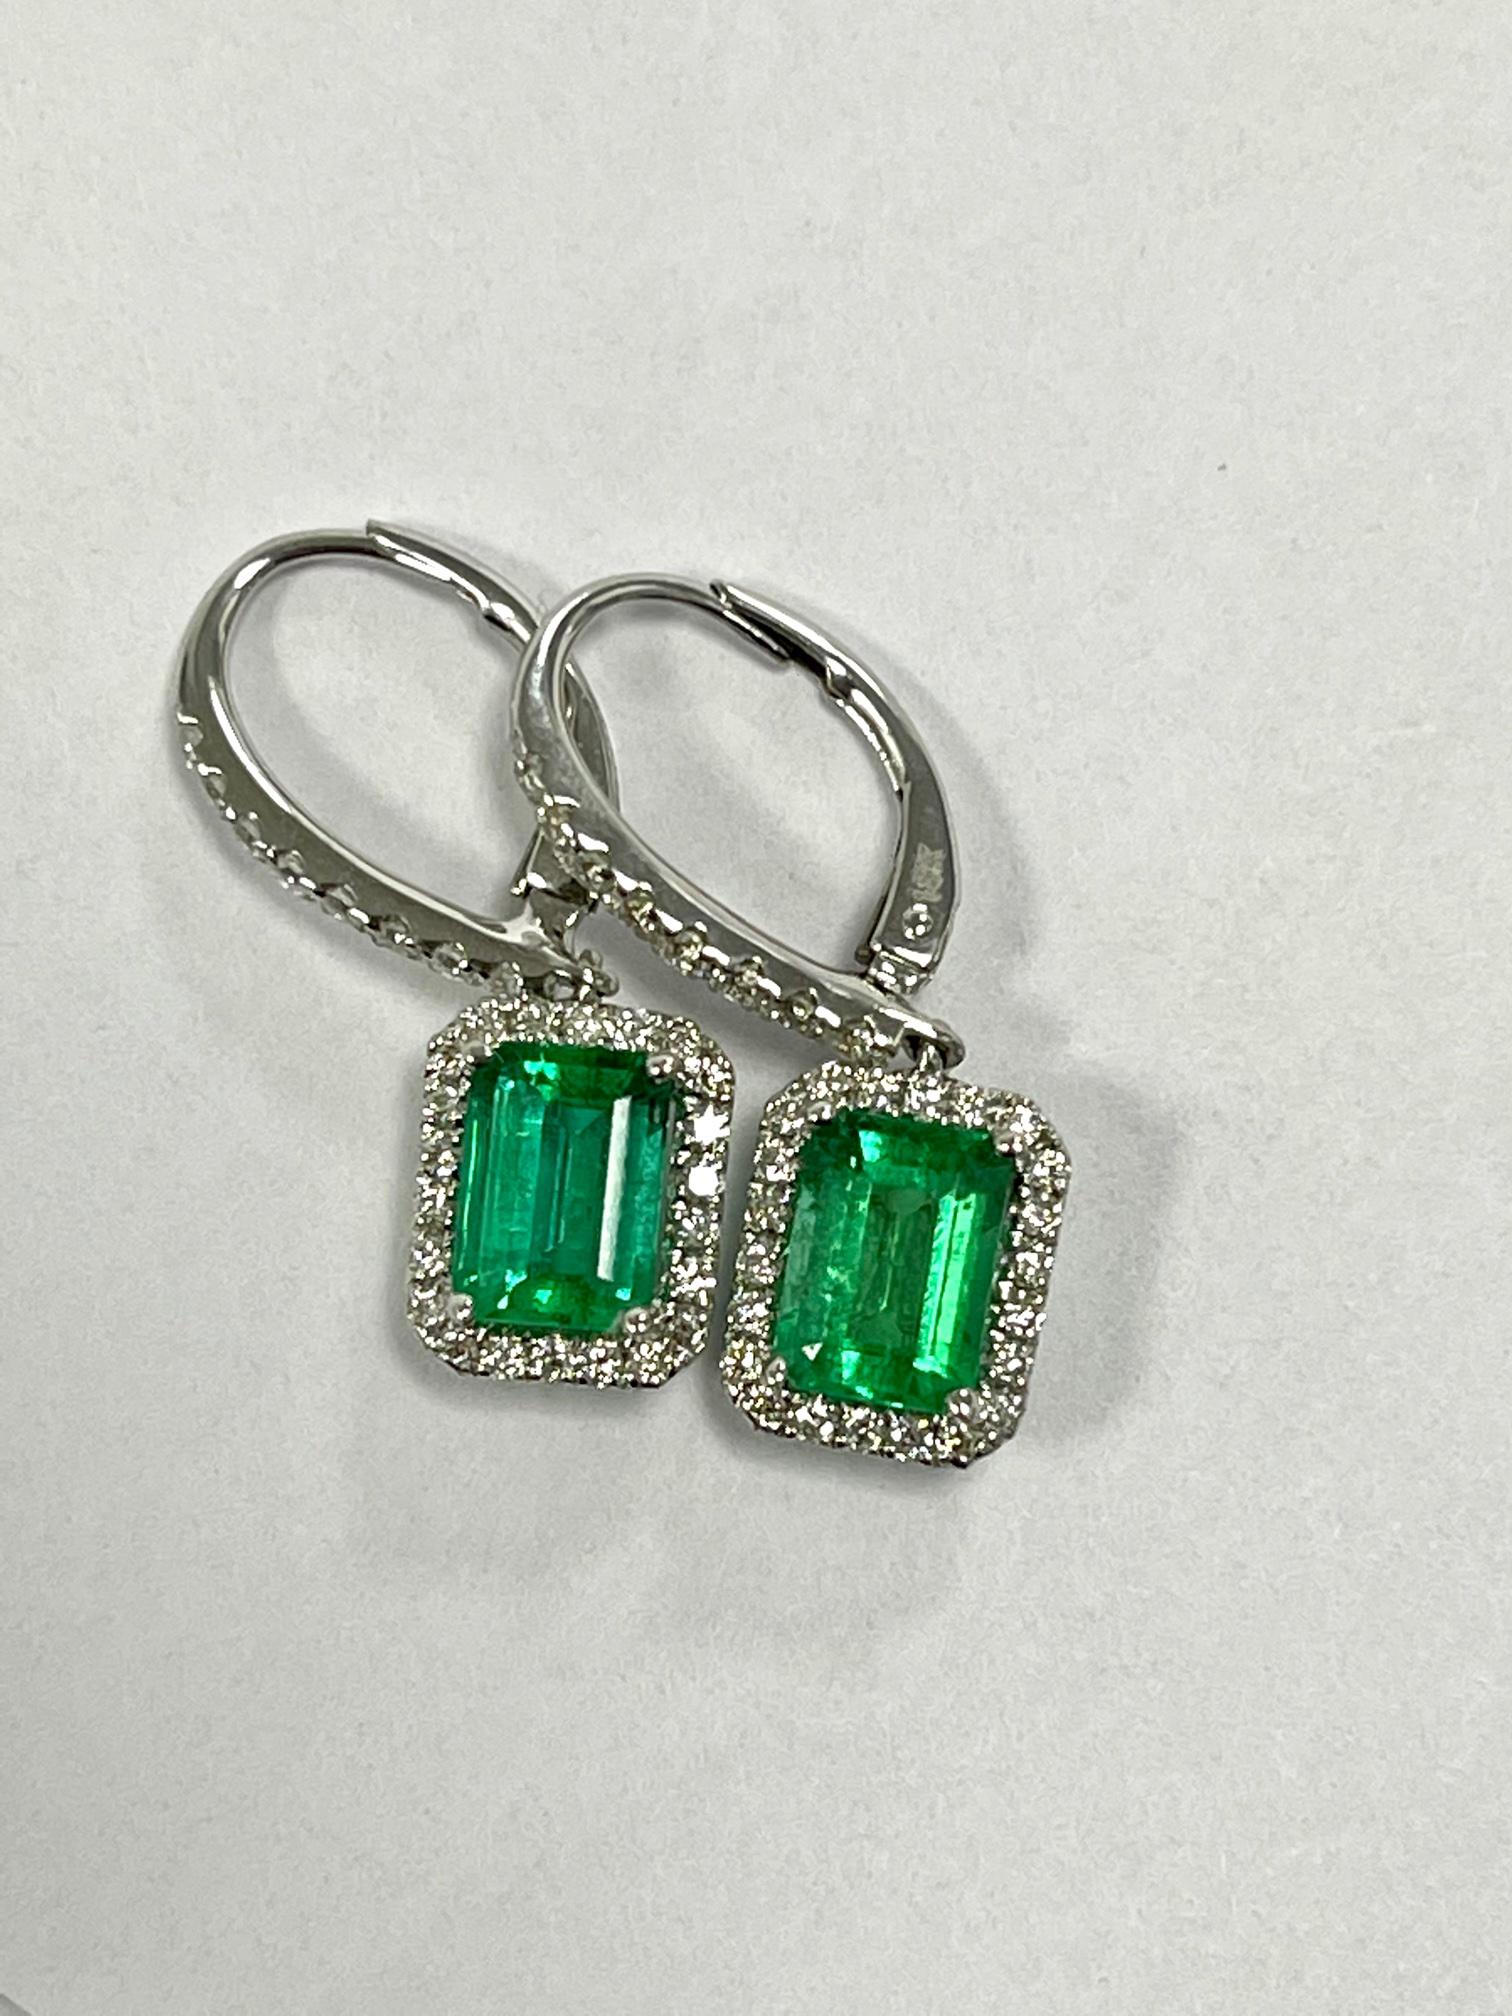 1.80 Carat Zambian emerald cut emerald set in 18k white gold earrings with 0.47 carat Diamonds .